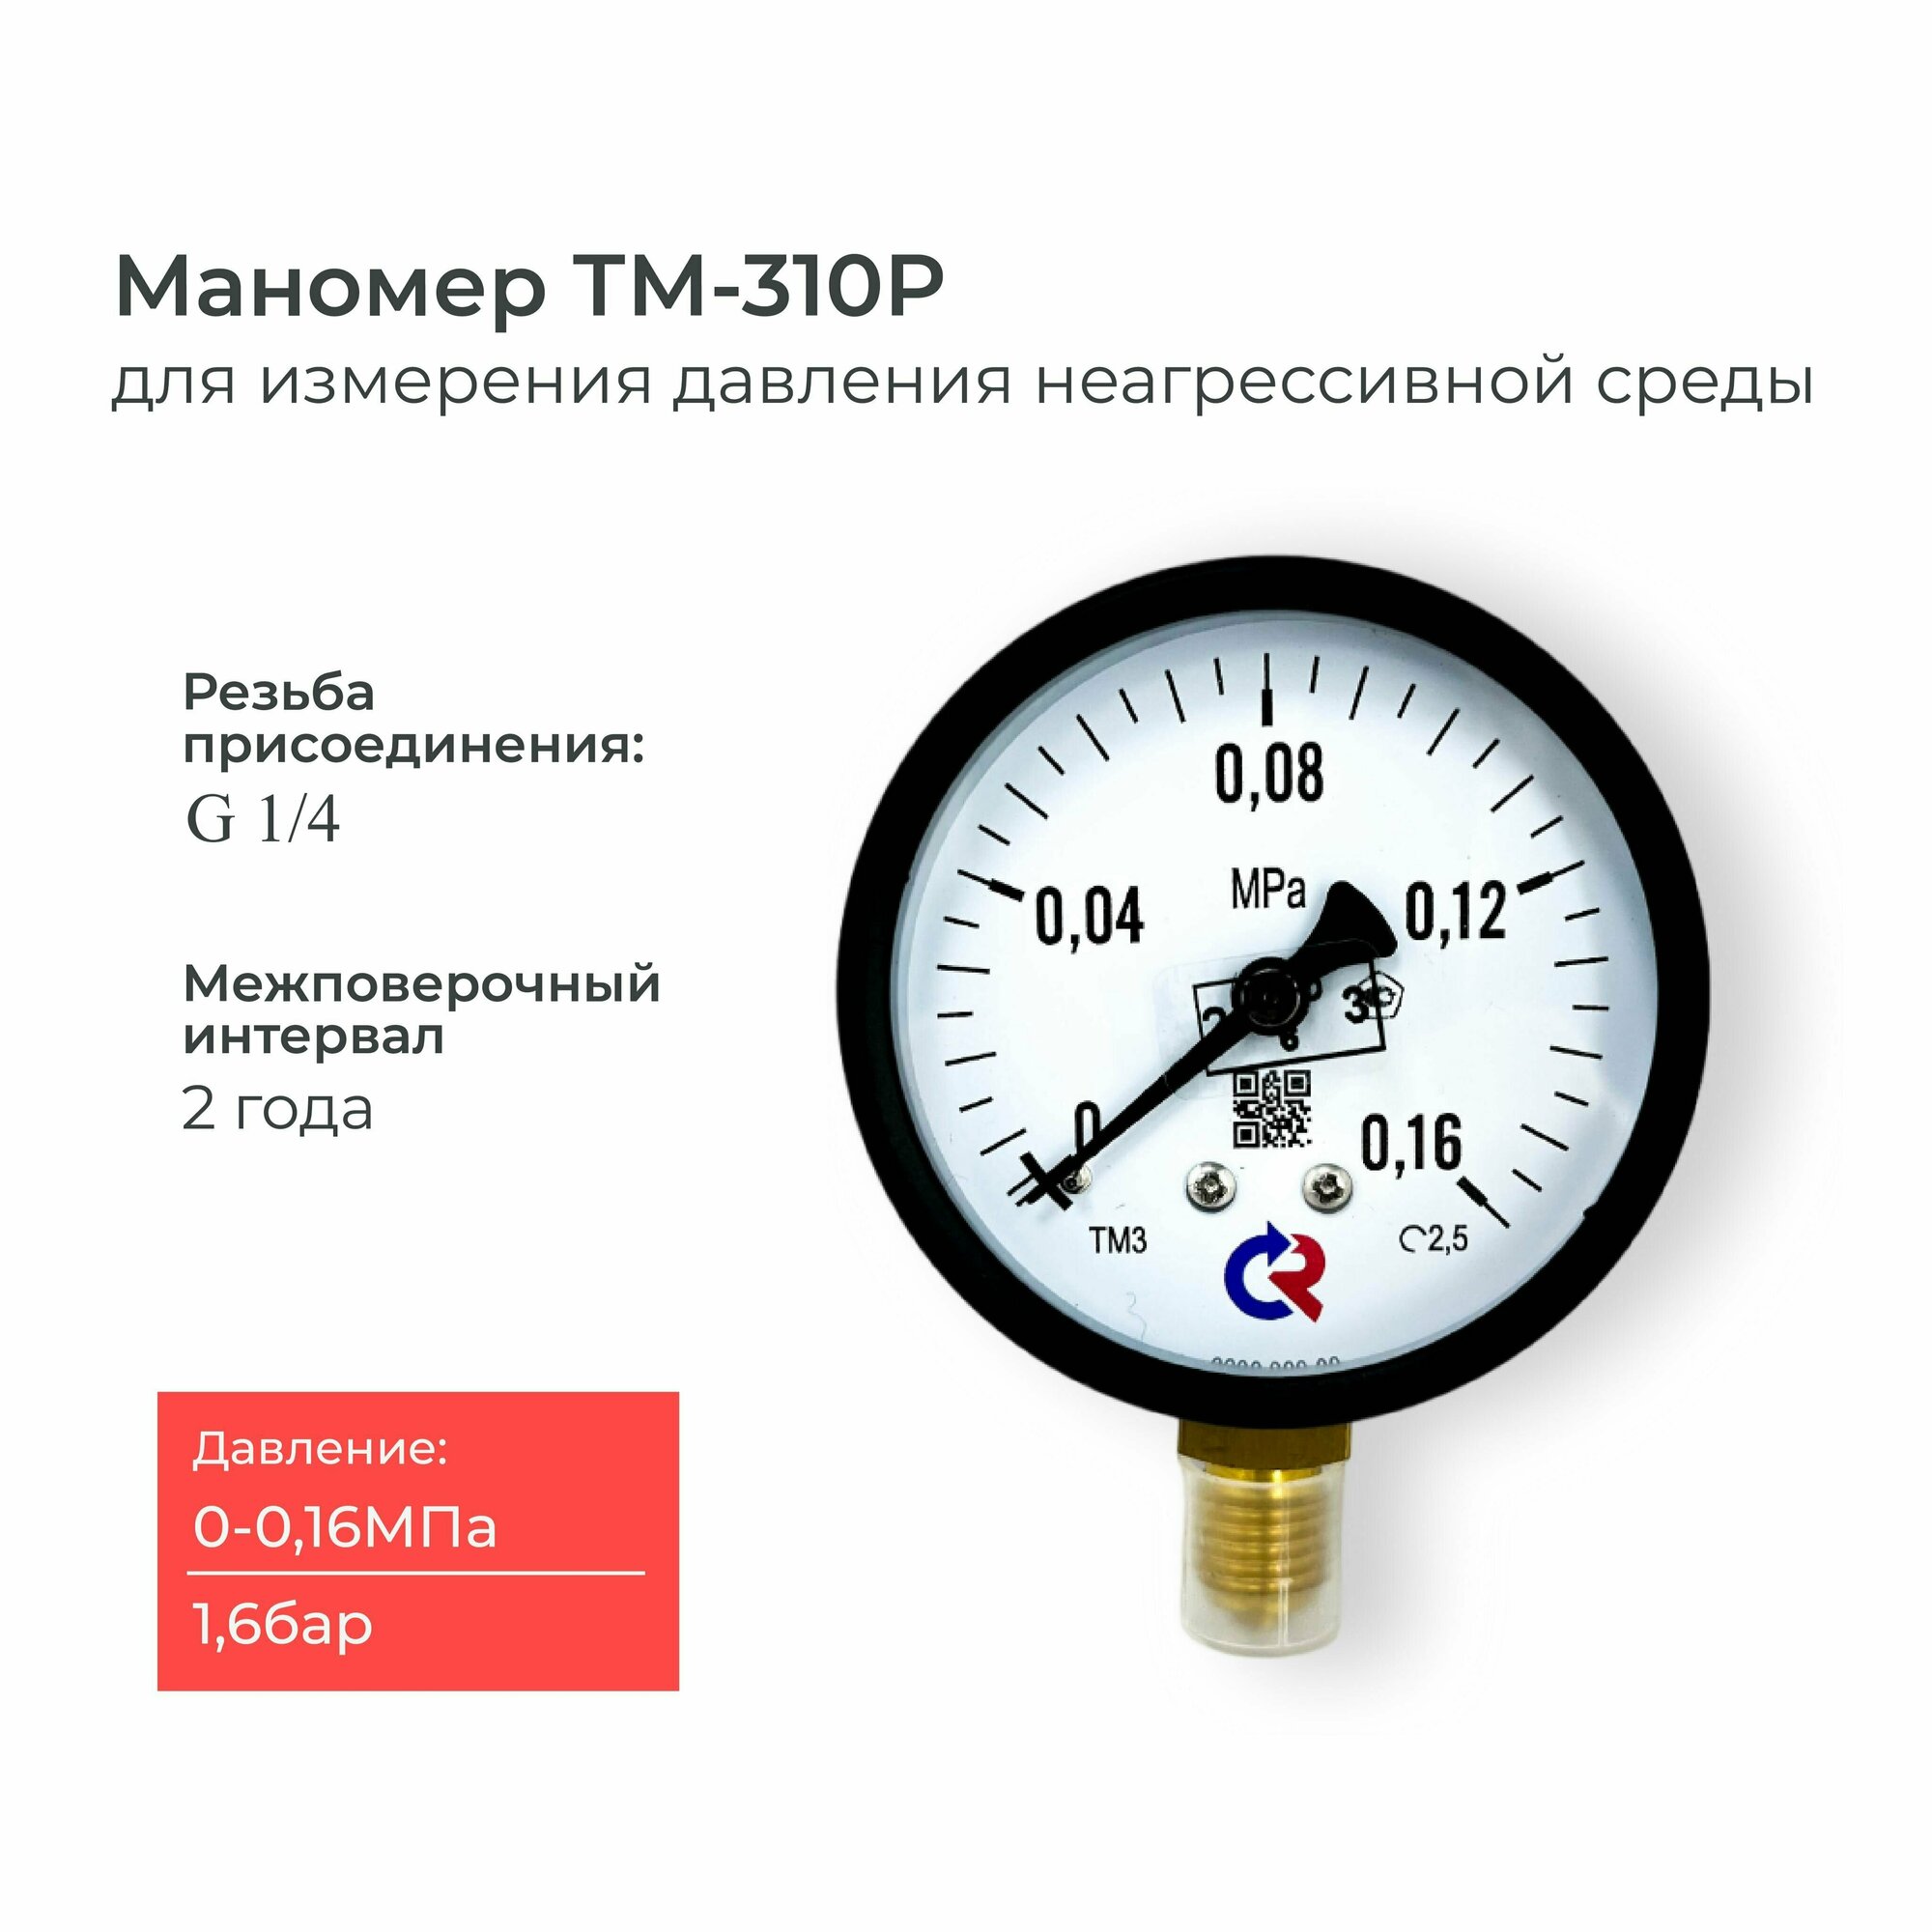 Манометр ТМ-310P давление 0-0.16 МПа (1.6 бар) резьба G1/4 класс точности 2,5 корпус 63 мм.